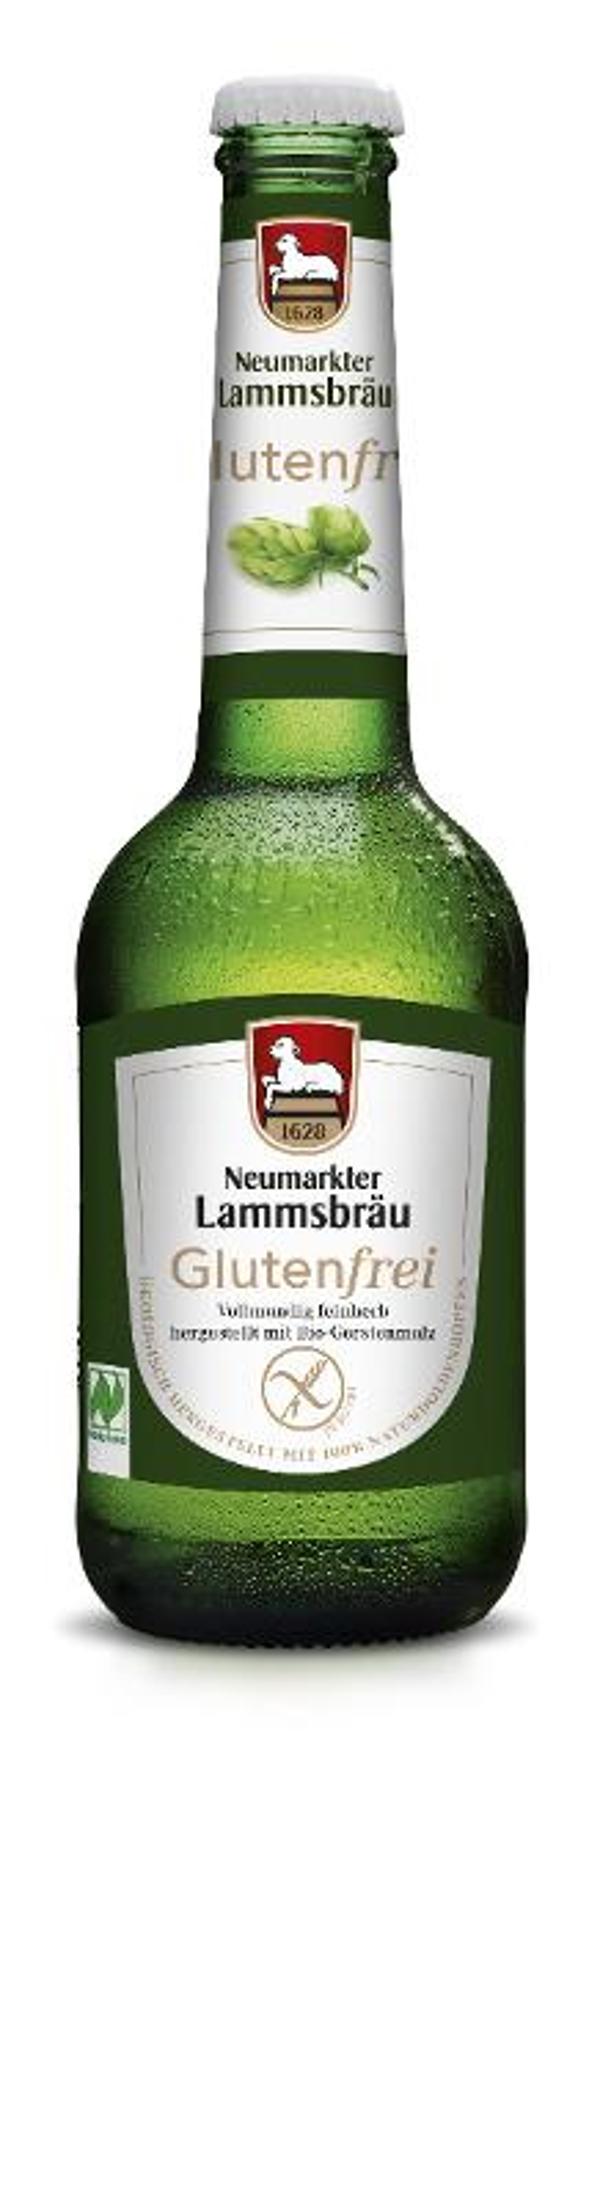 Produktfoto zu Lammsbräu glutenfreies Bier